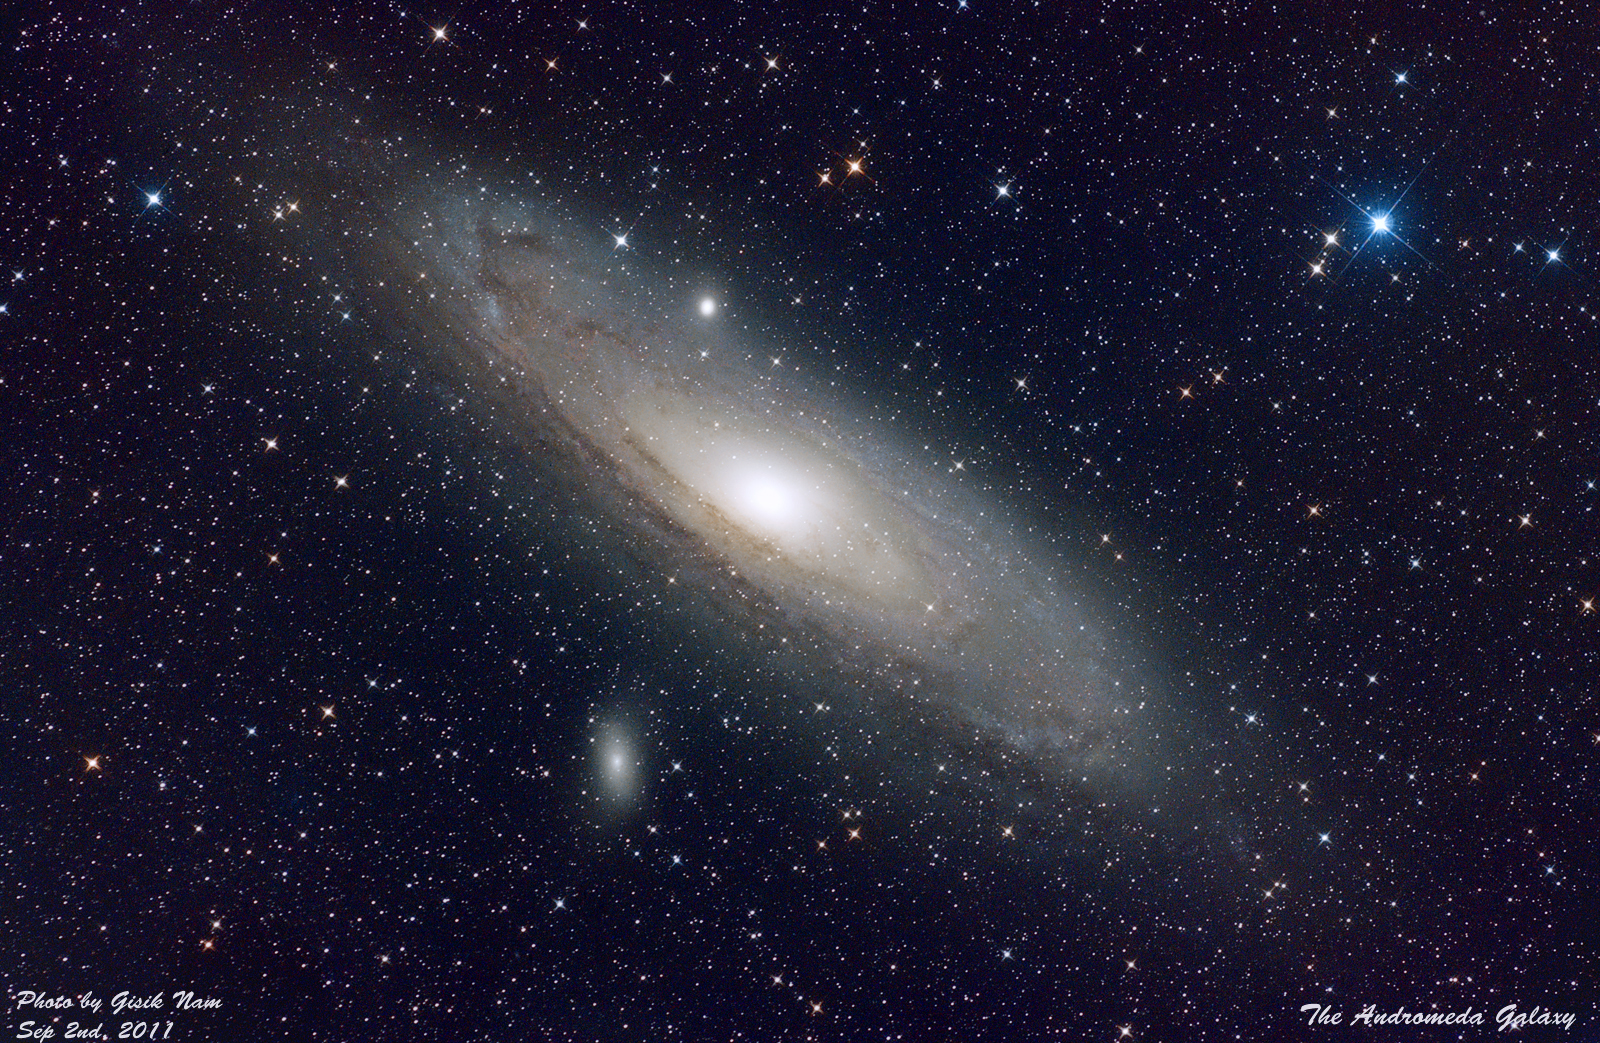 m31.jpg : The Andromeda Galaxy